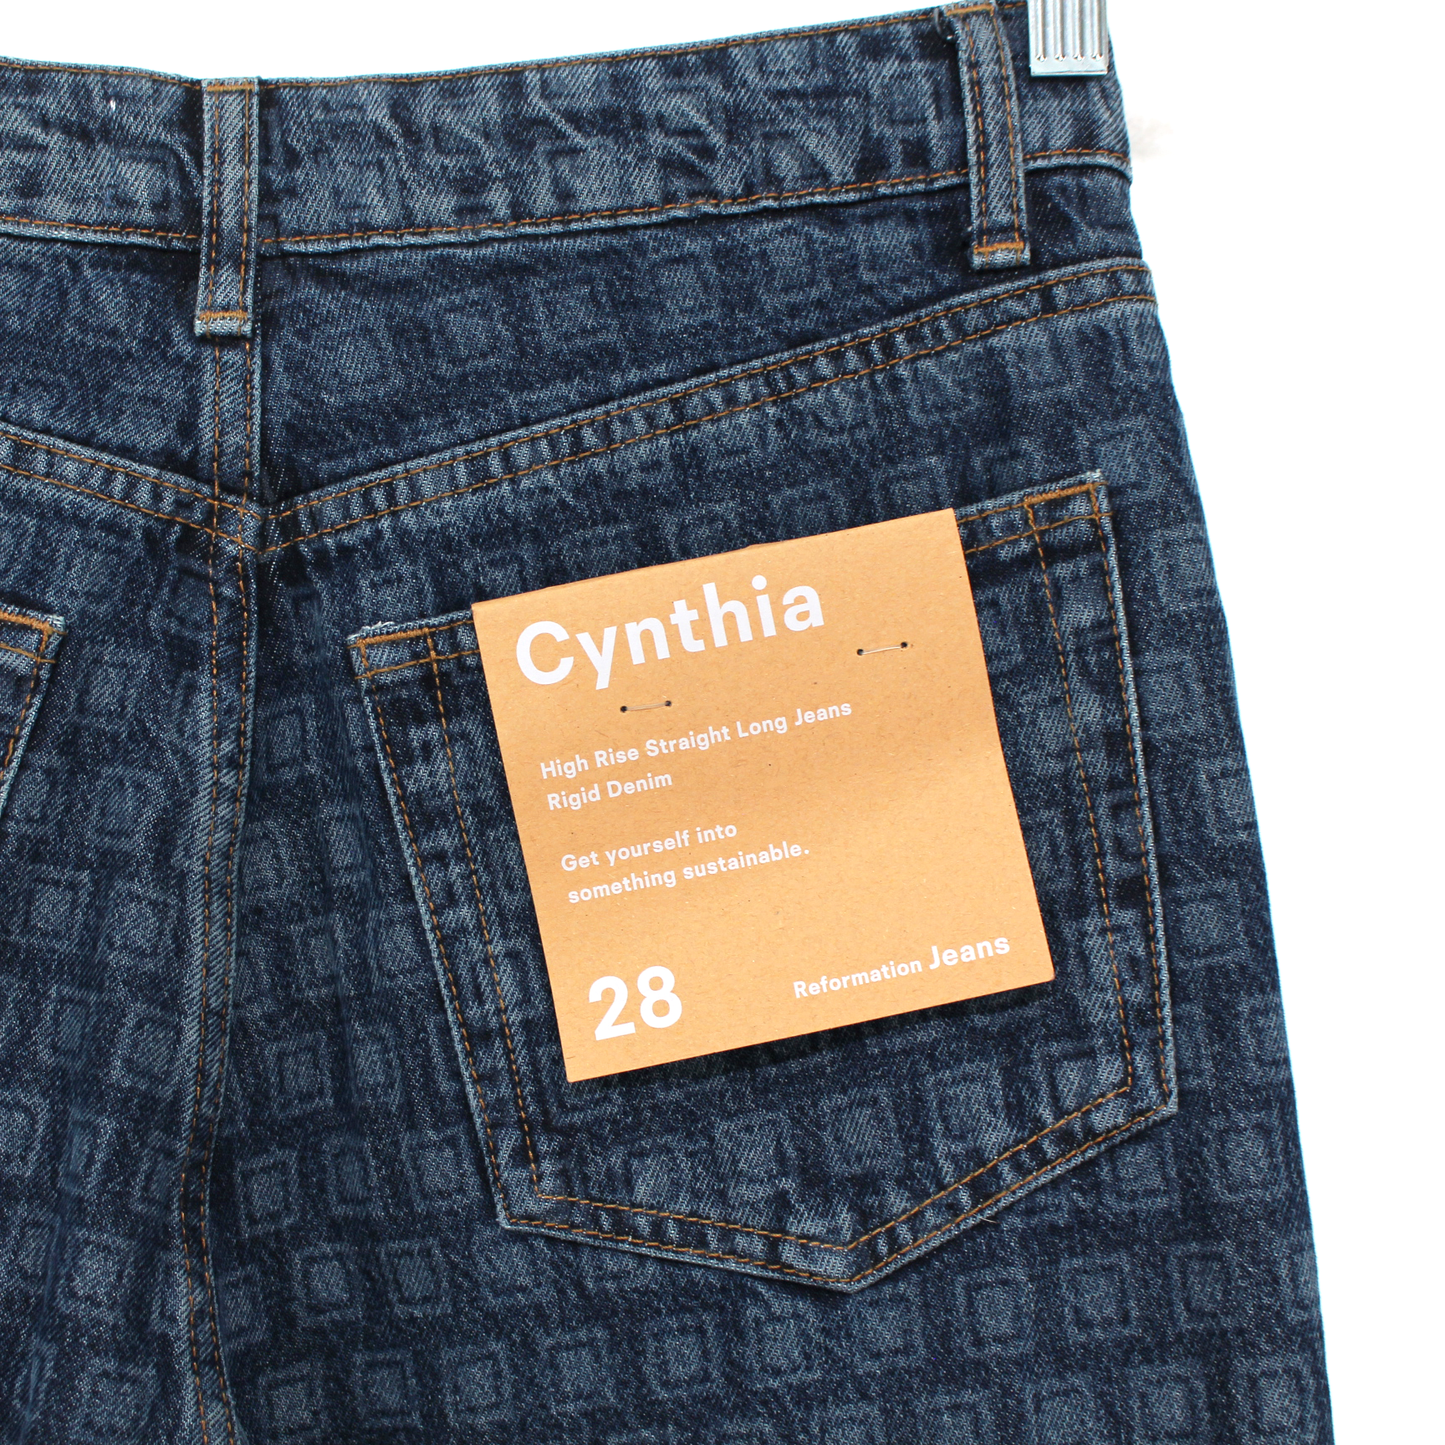 Reformation Cynthia Disco Jeans